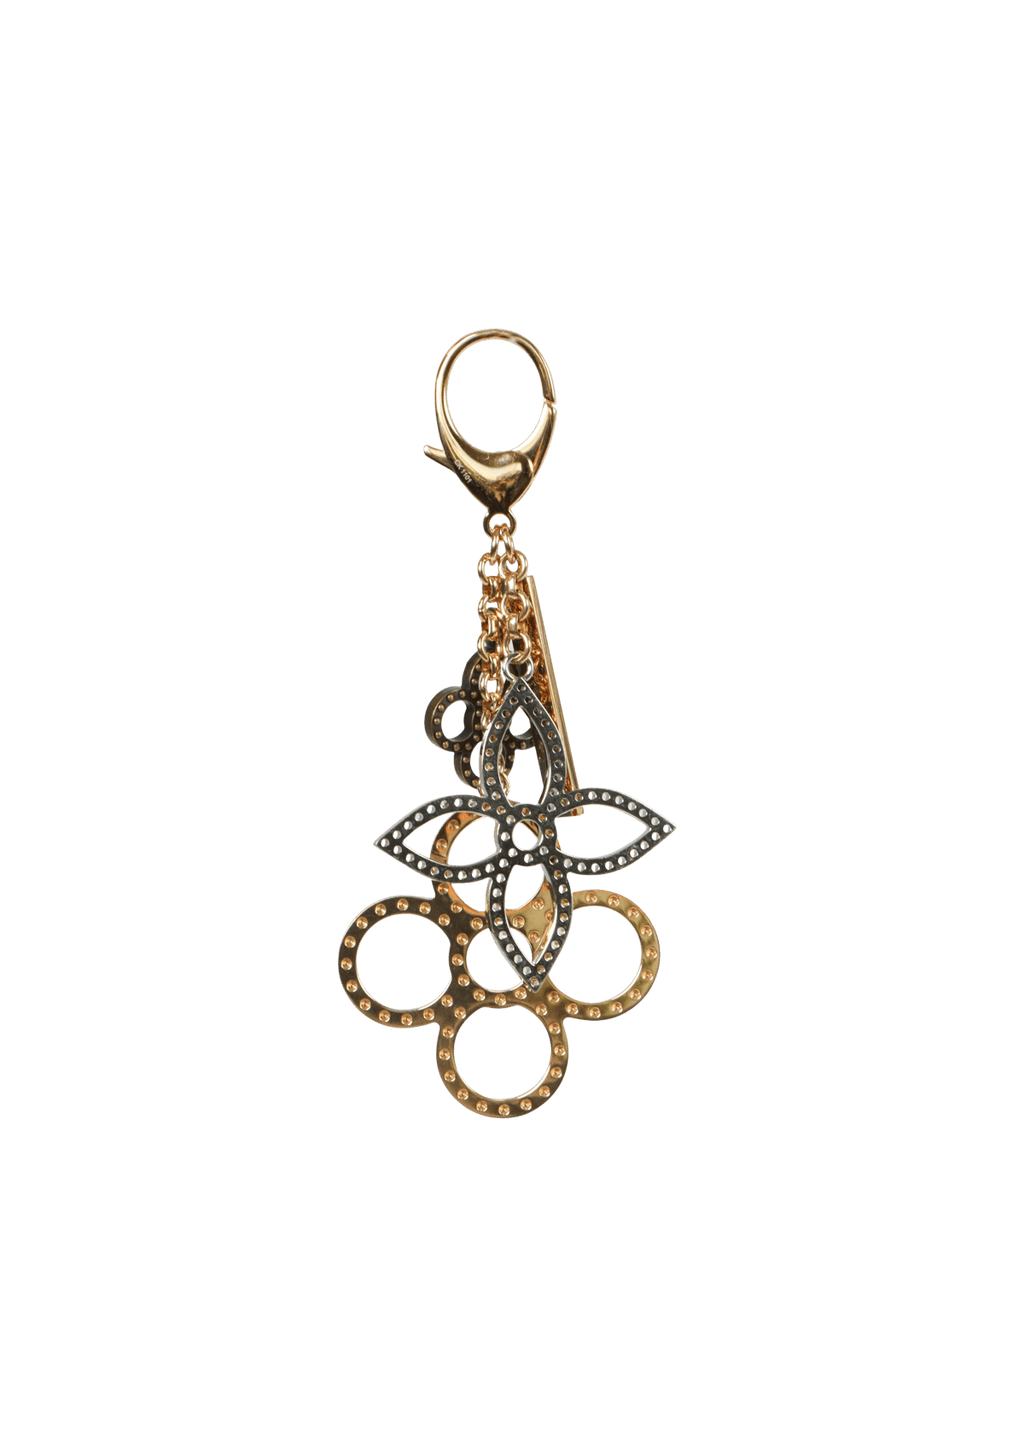 Louis Vuitton Louis Vuitton Bijoux Sack Playtime Keychain / Bag Charm